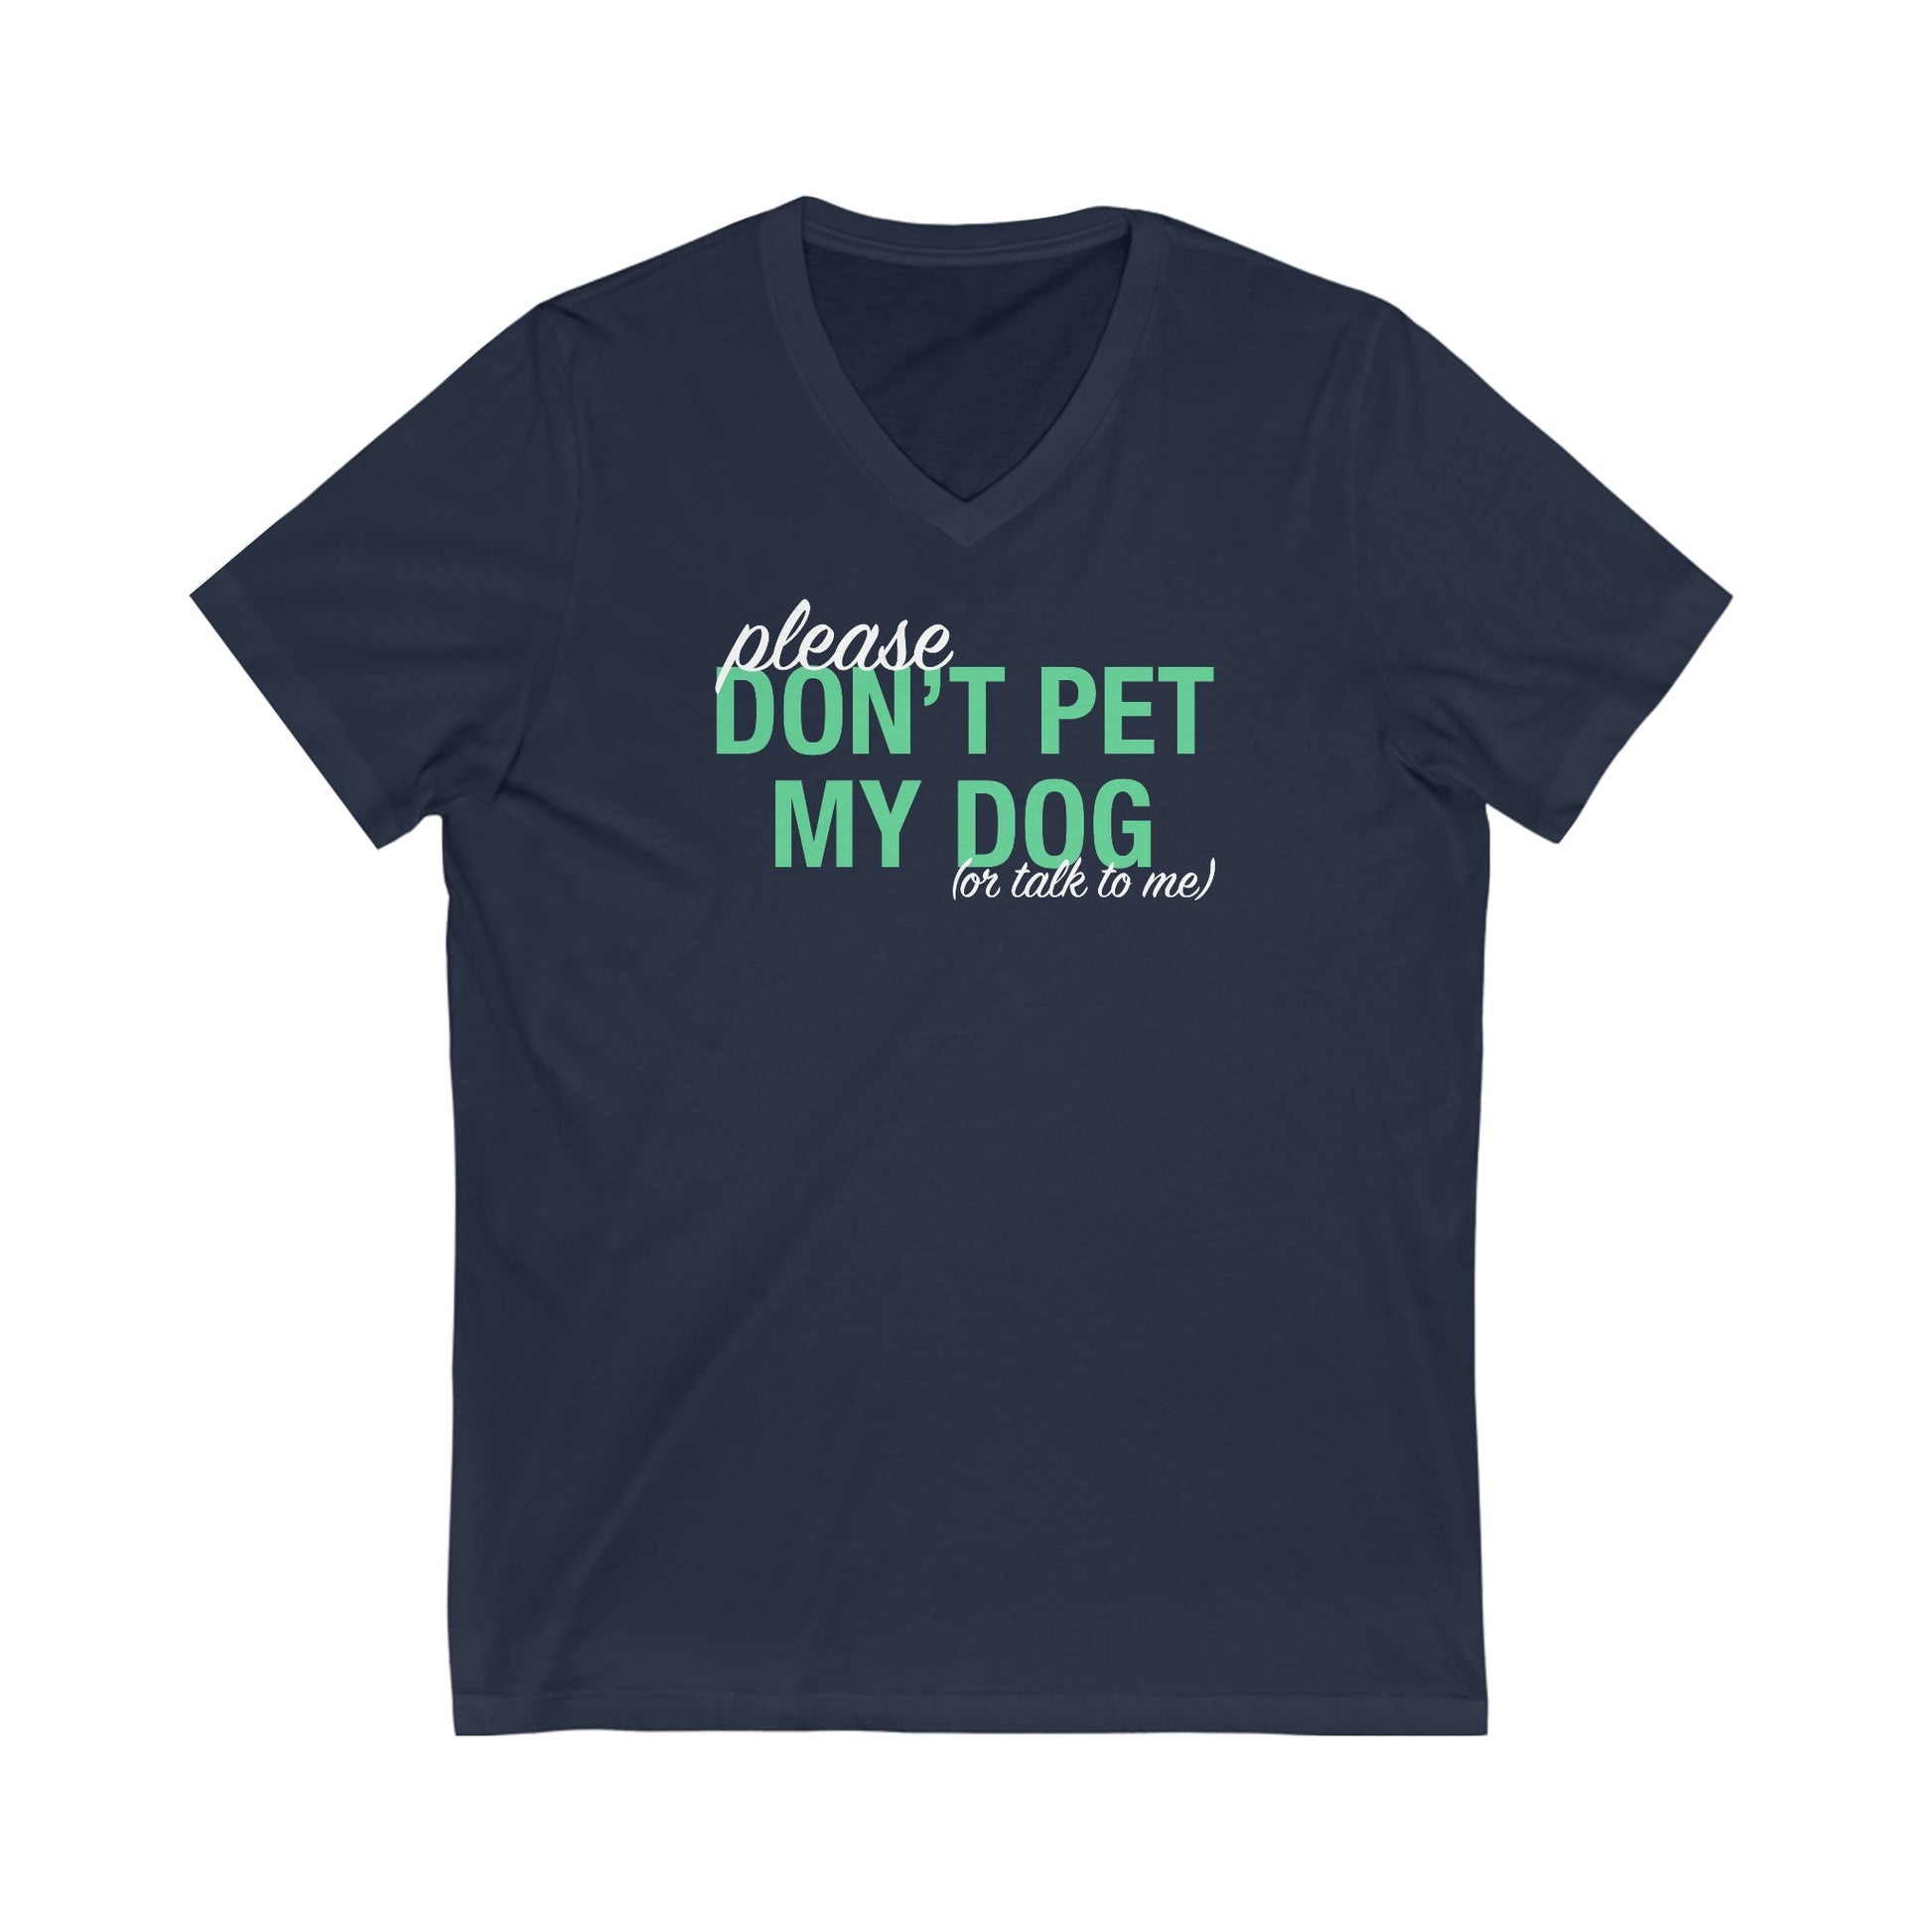 Please Don't Pet My Dog (Or Talk To Me) | Unisex V-Neck Tee - Detezi Designs-30985137344228386364